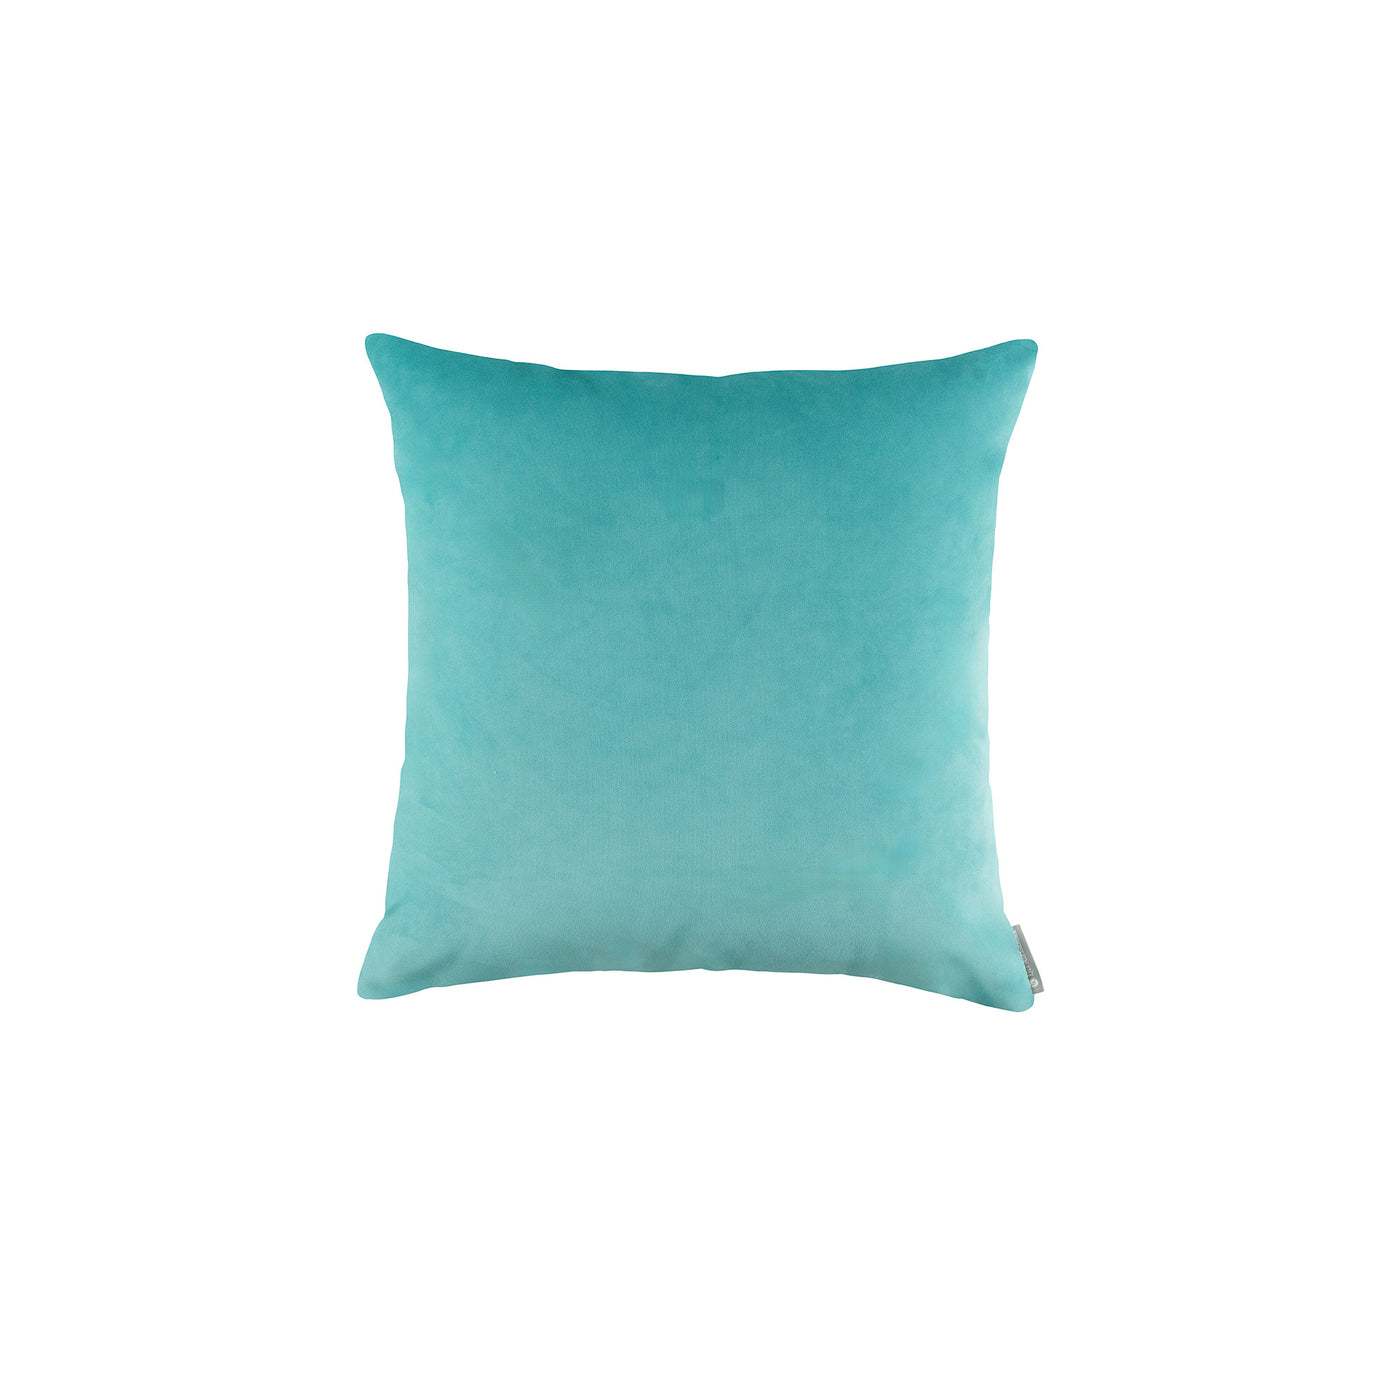 Vivid Bluebox European Pillow (26x26)